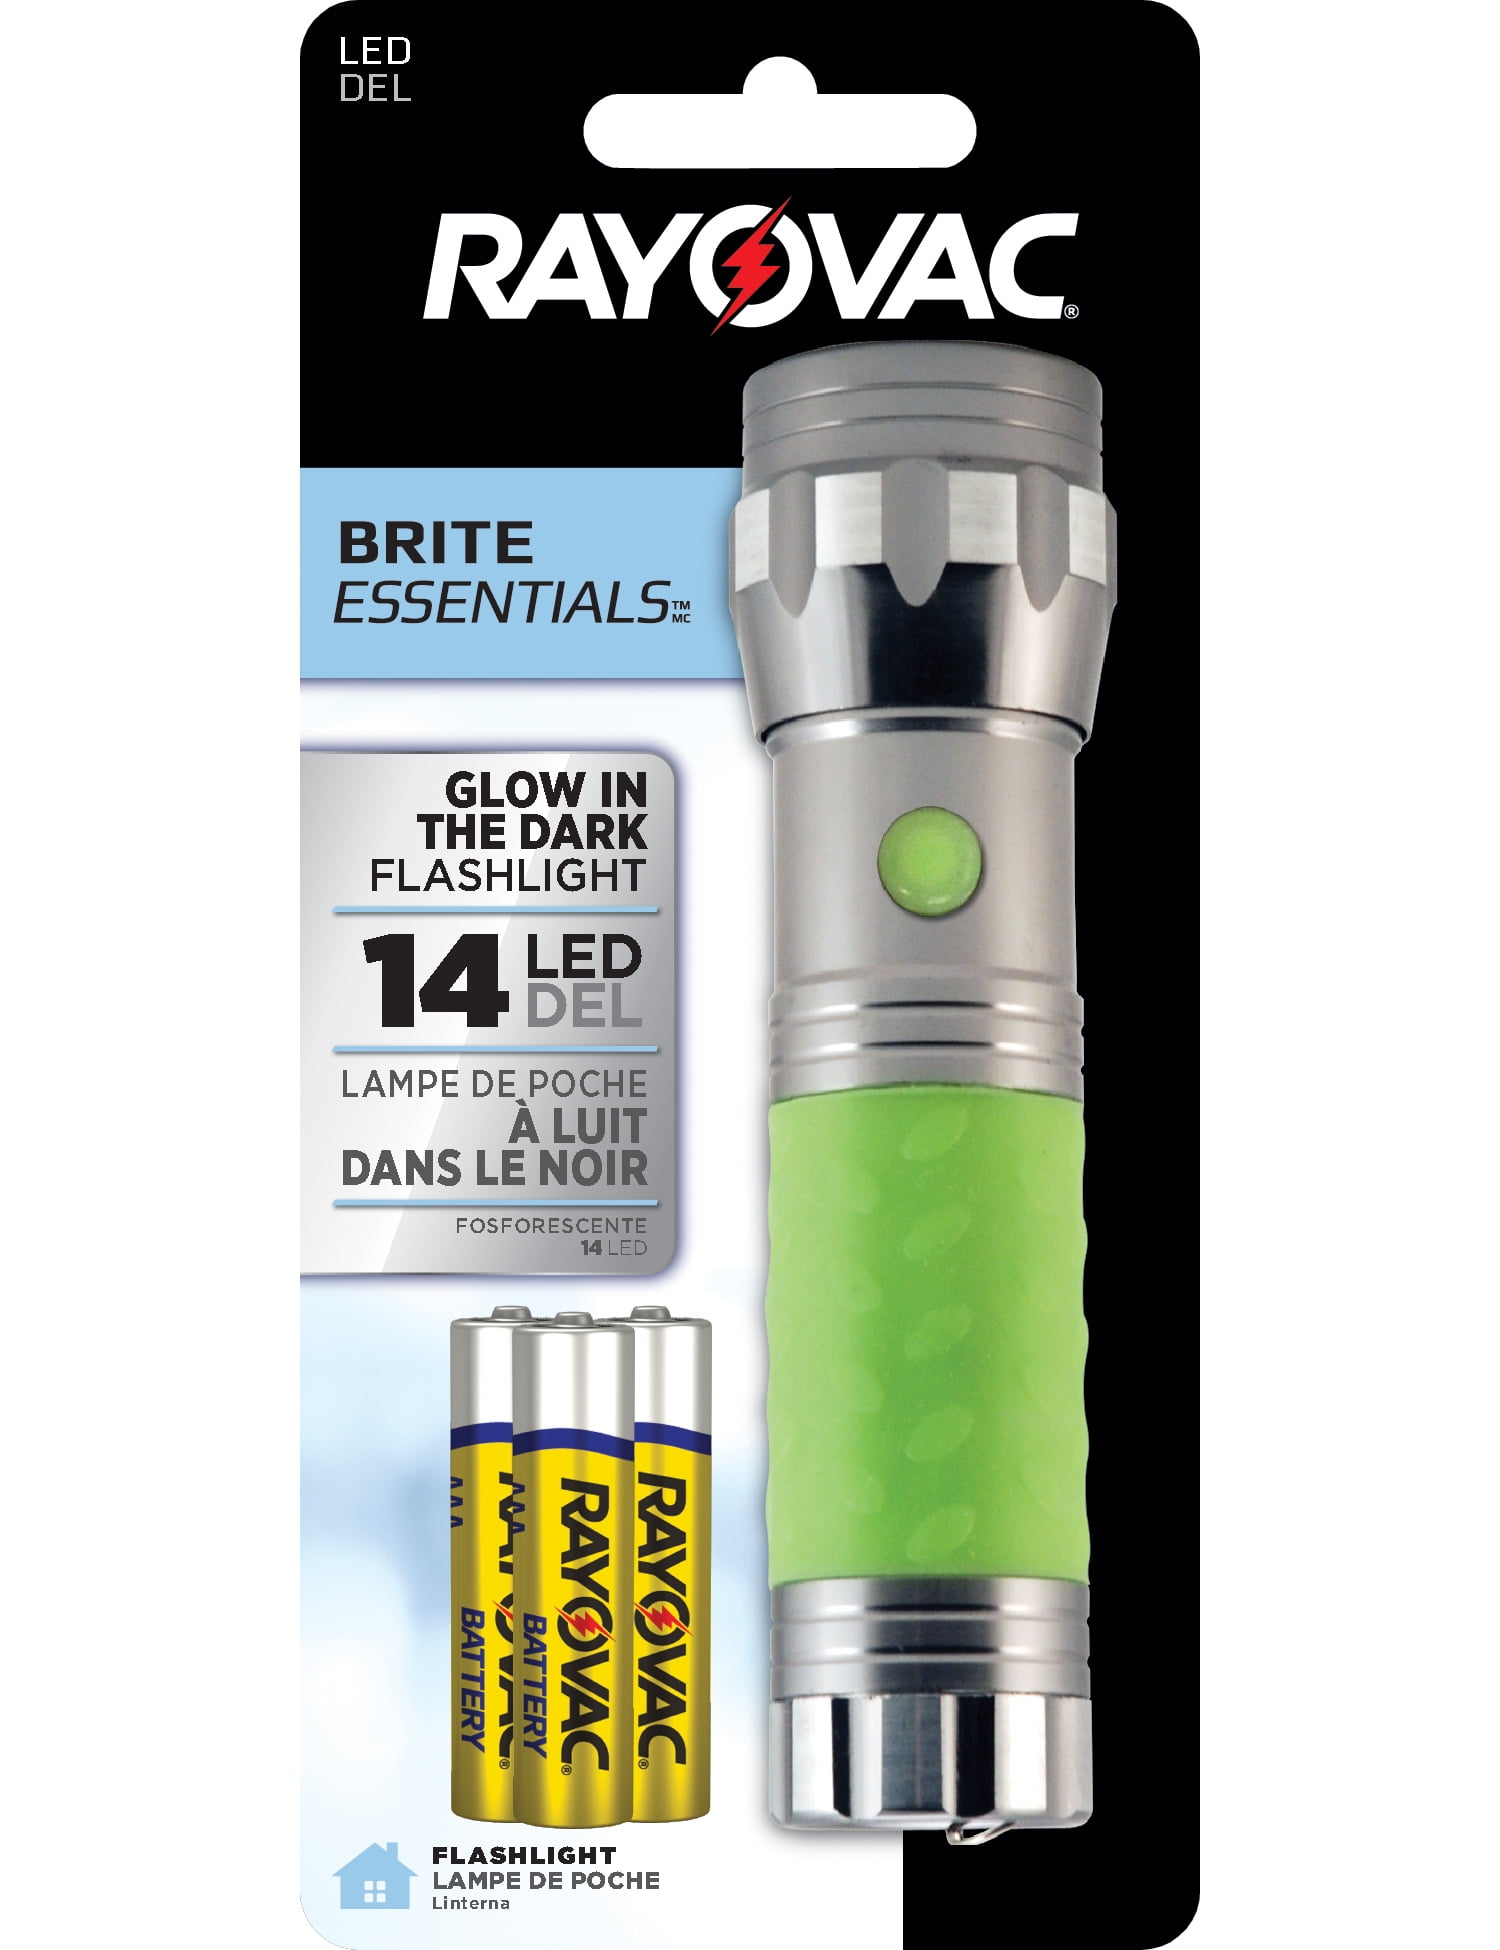 Rayovac LED 18 lumens Flashlight